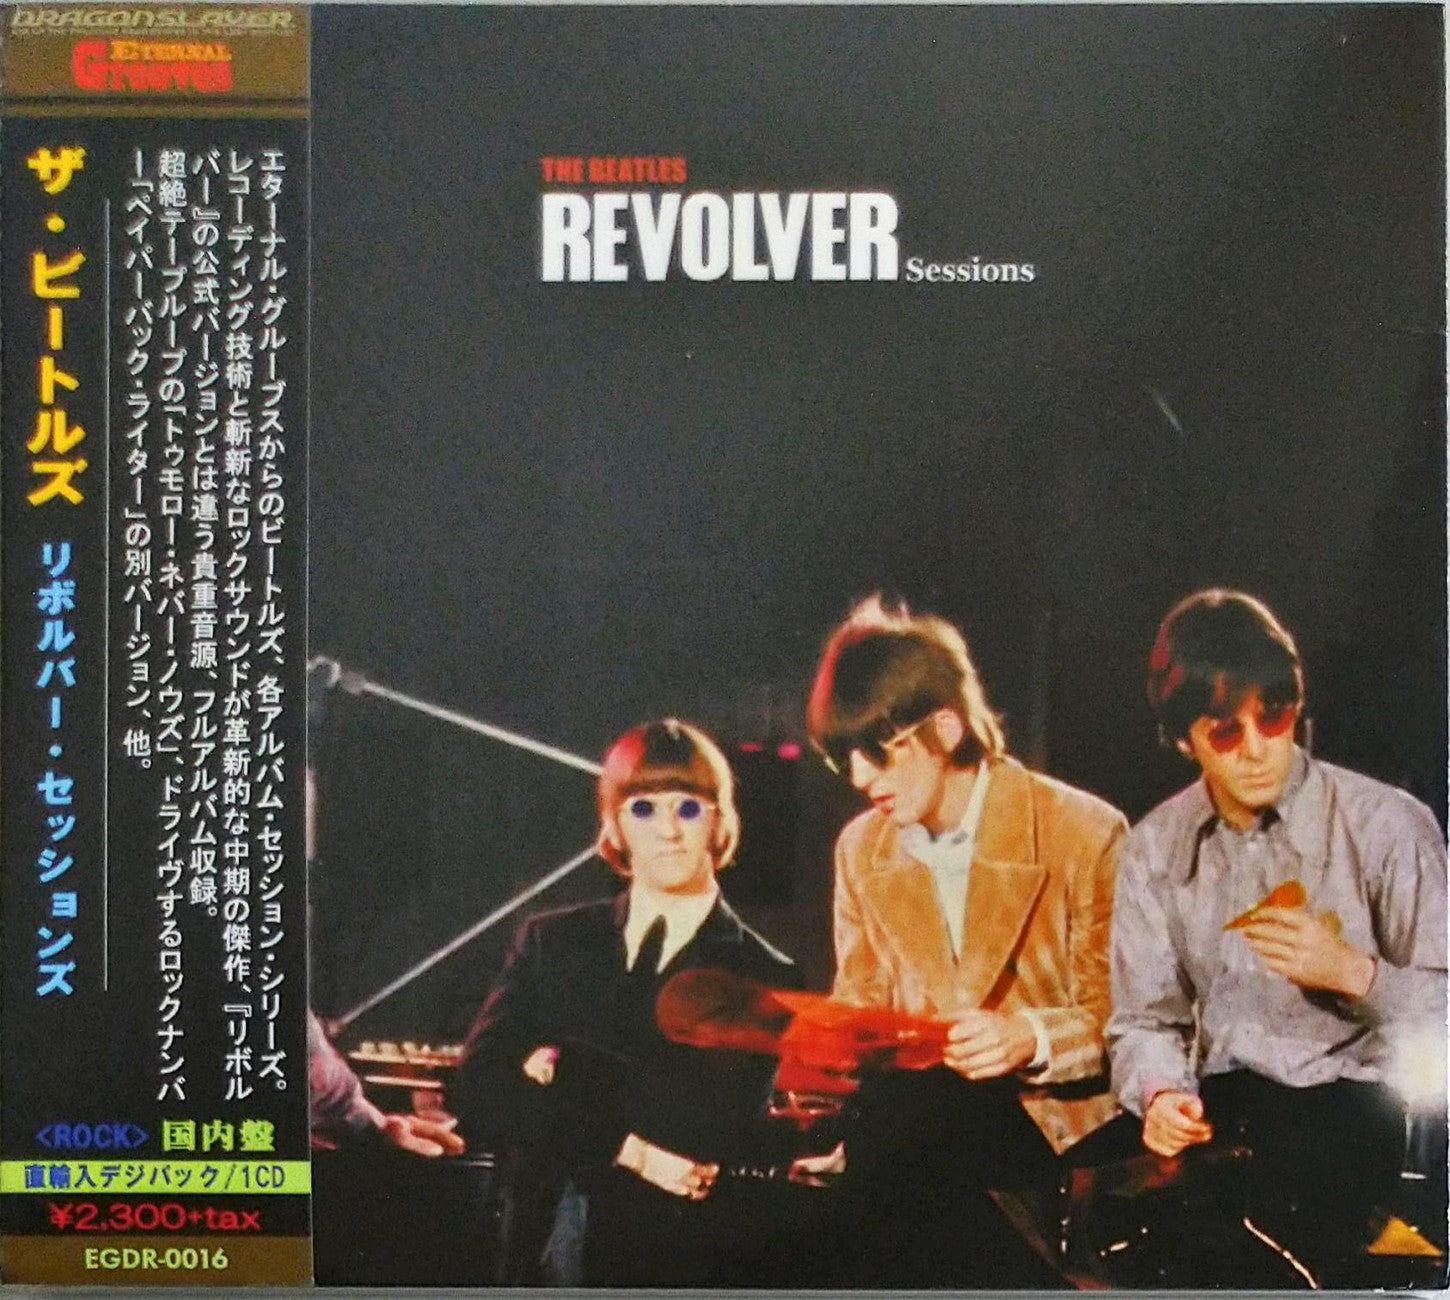  With The Beatles[LP]: CDs & Vinyl